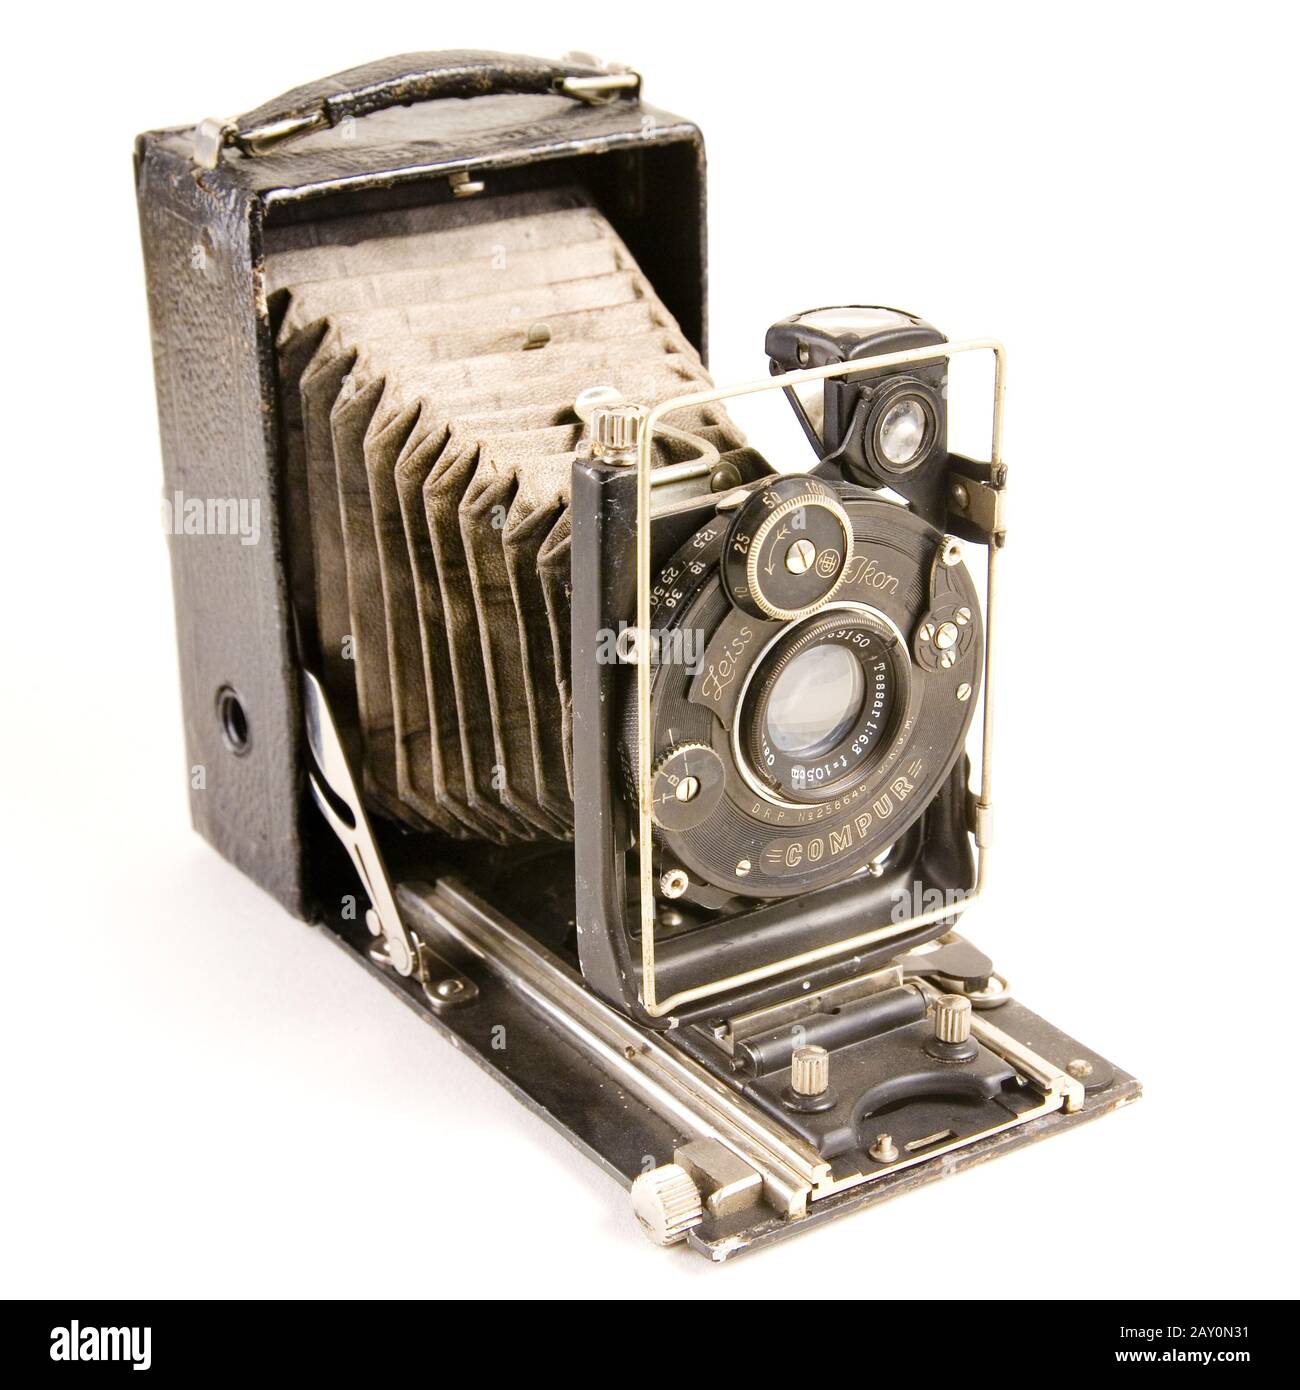 Vecchia fotocamera (Zeiss Ikon Compur) * vecchia fotocamera (Zeiss Ikon  Compur Foto stock - Alamy